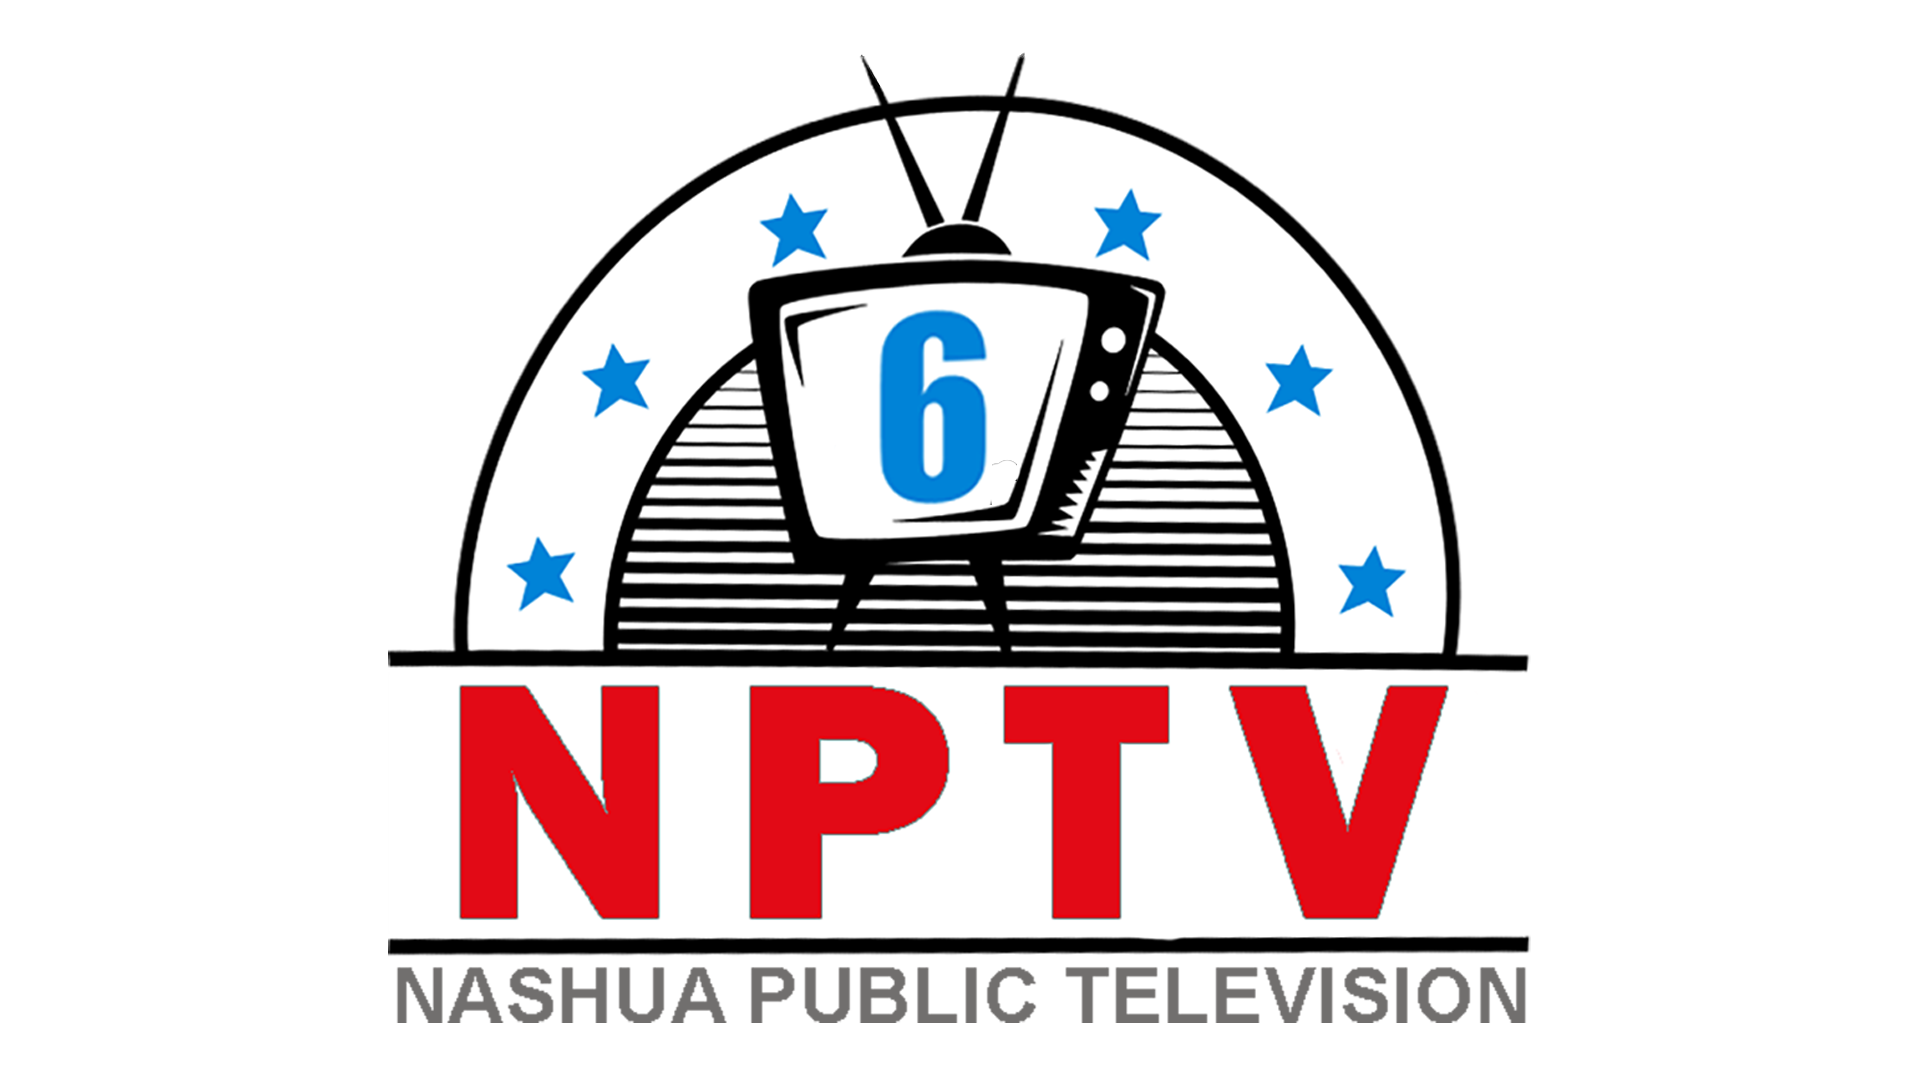 NCM - Nashua Community Media - Nashua Public Television - organization logo